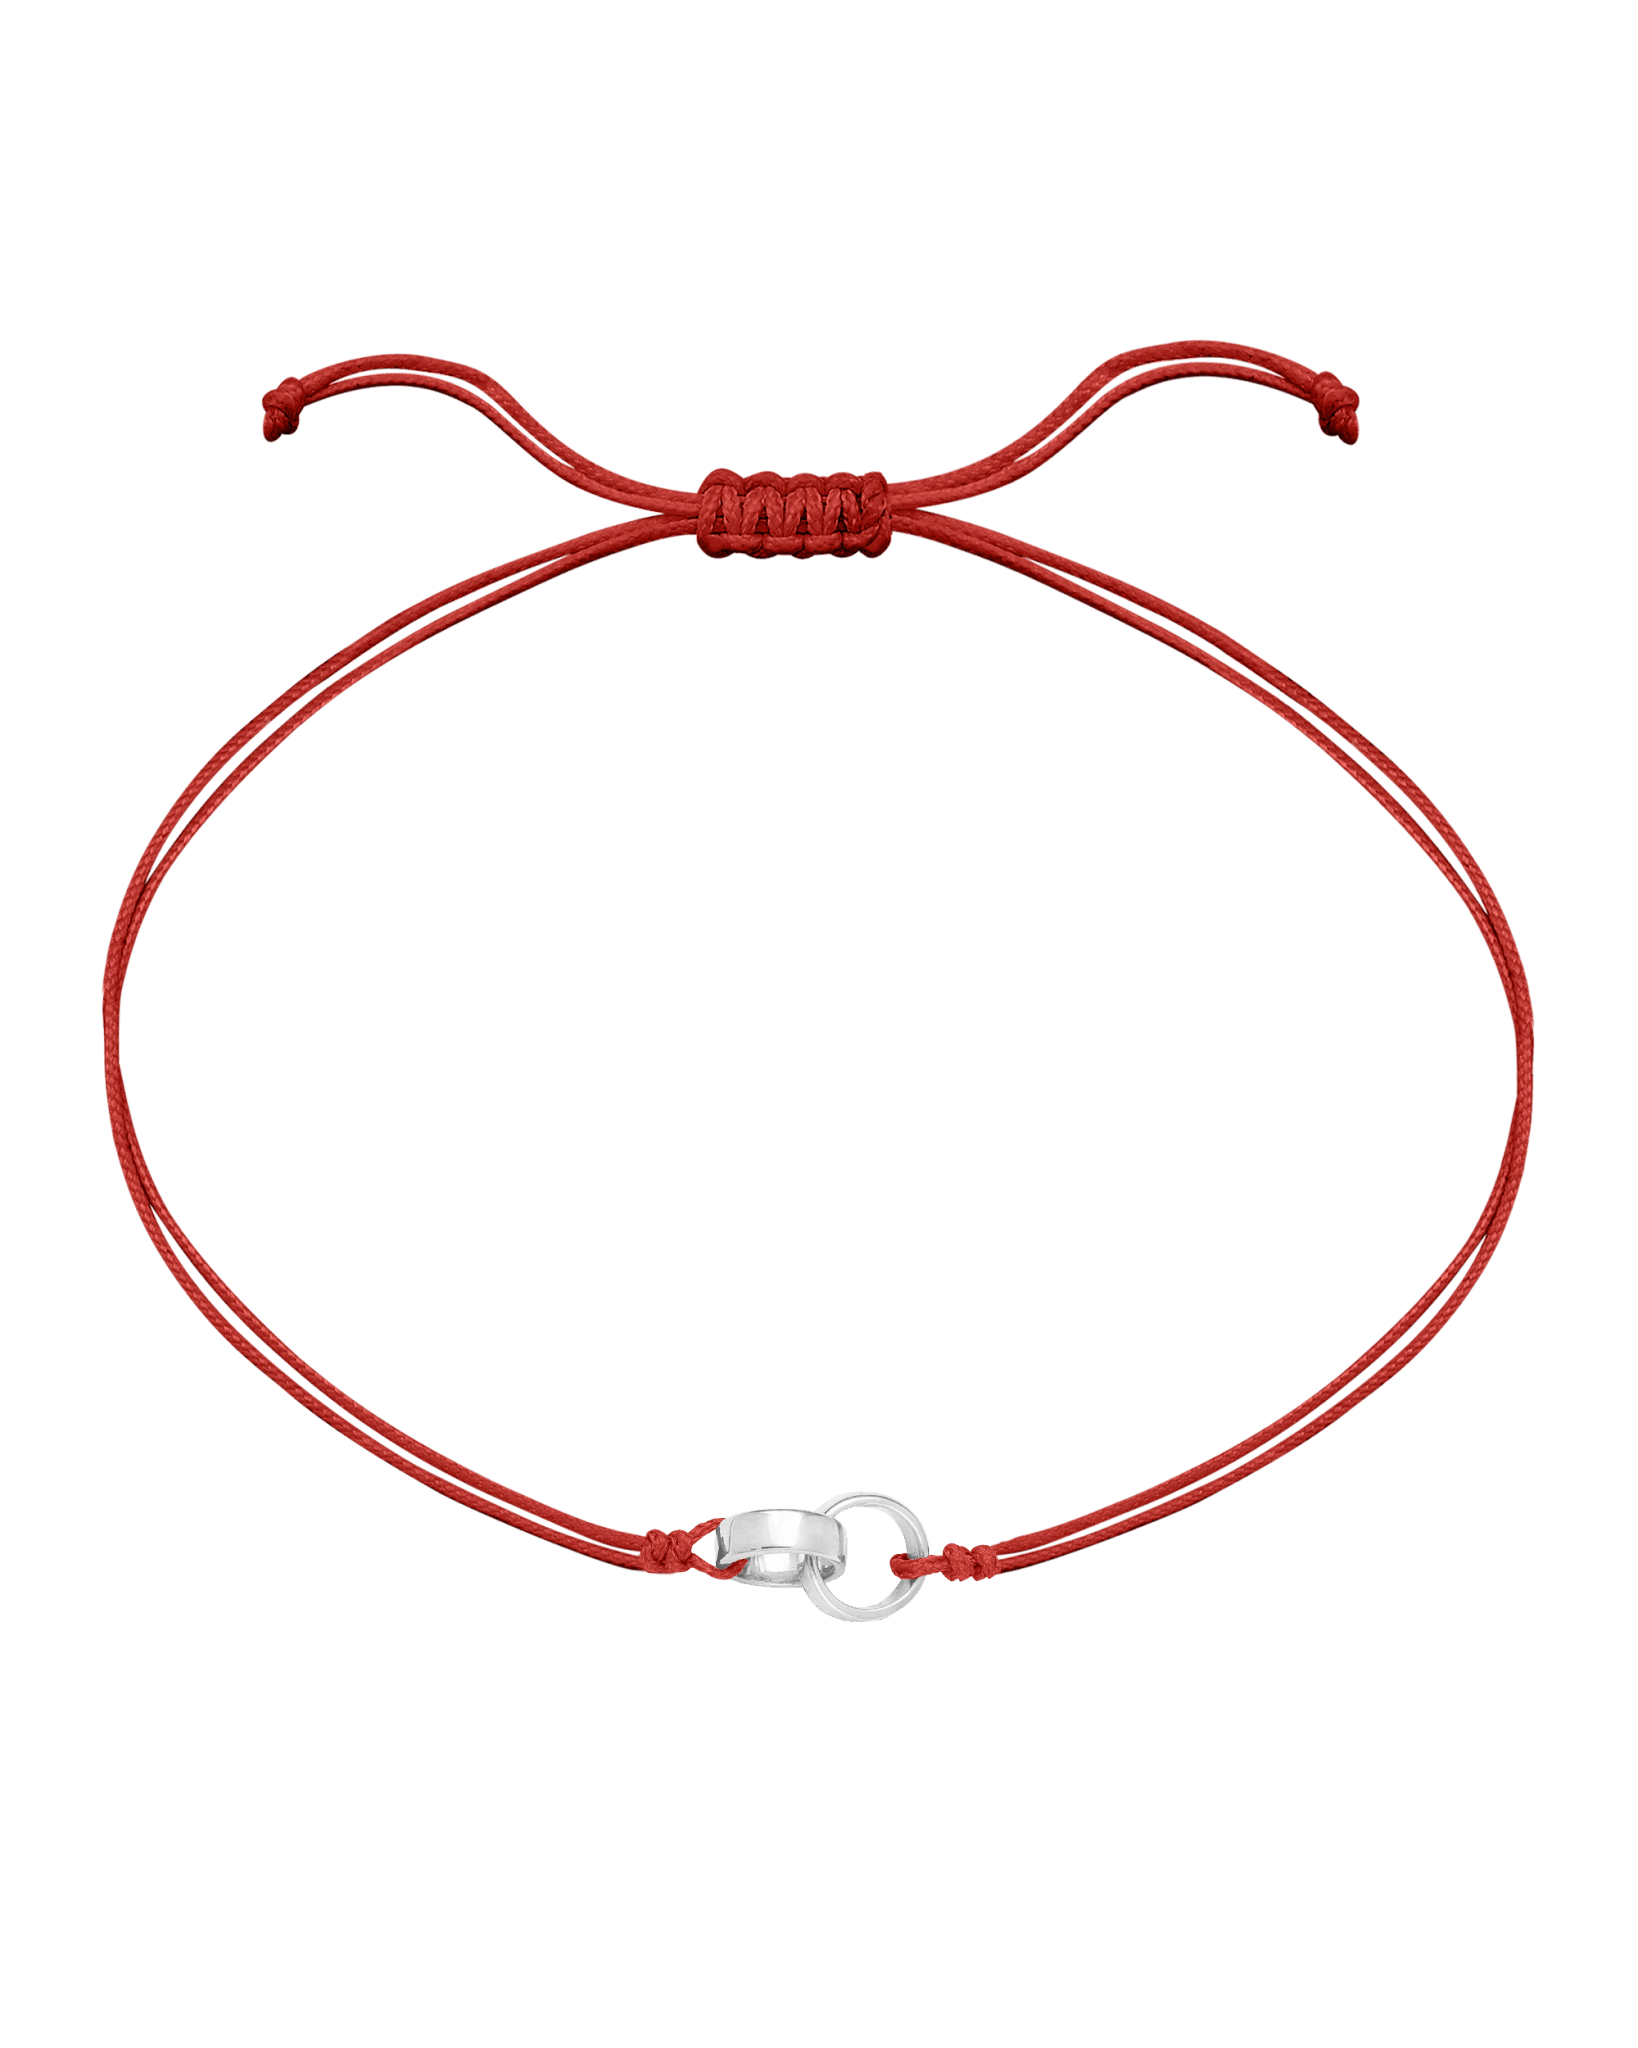 Engravable Links of Love - 14K White Gold Bracelets magal-dev 2 Red 